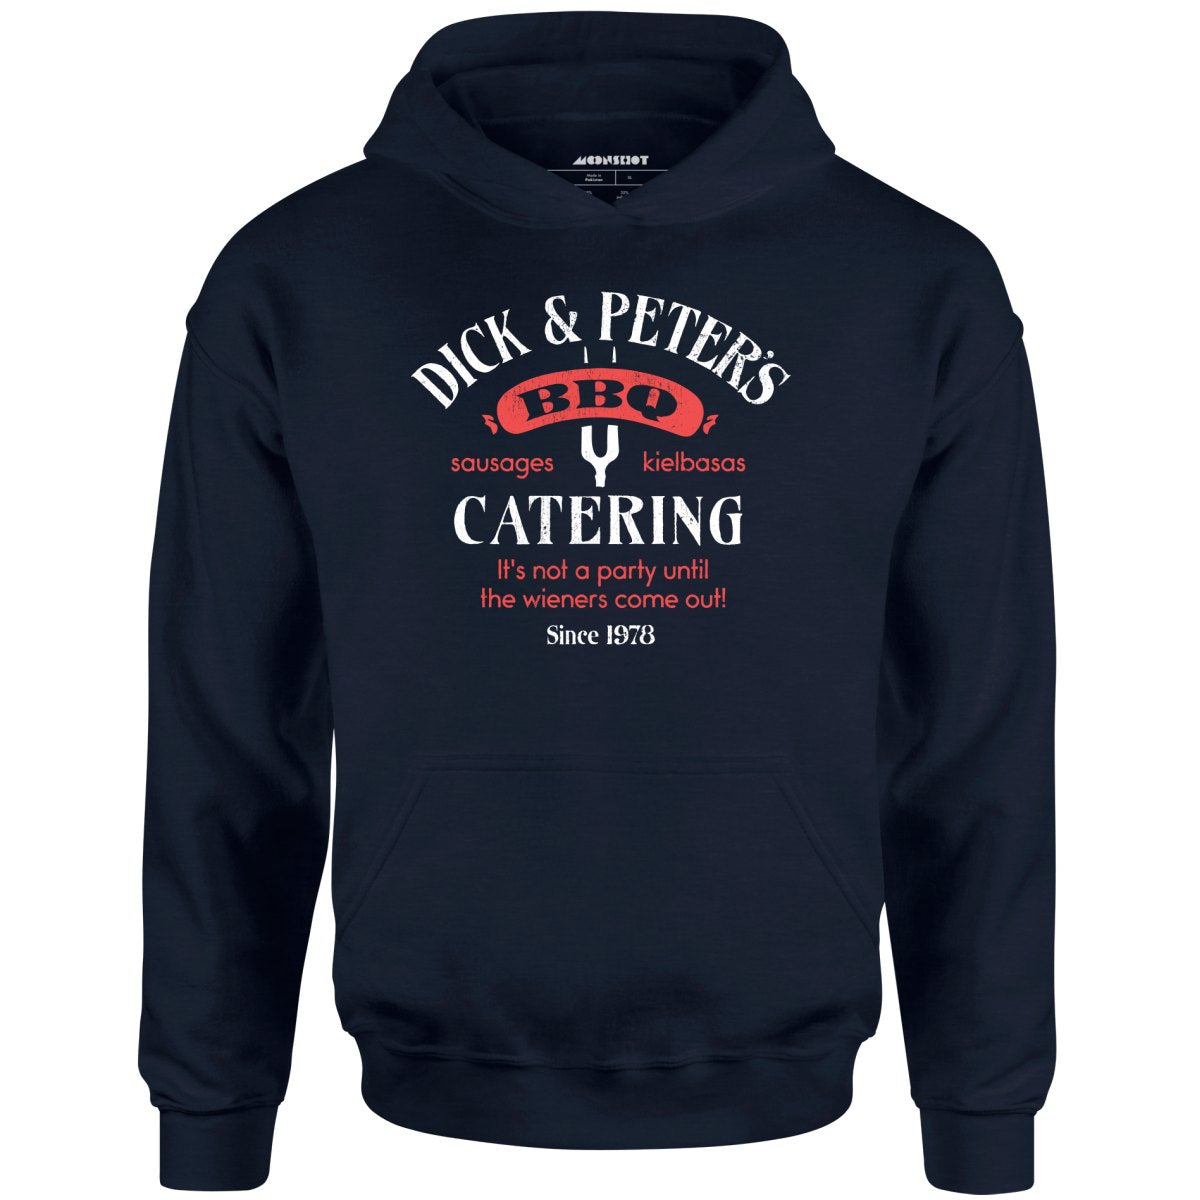 Dick & Peter's BBQ Catering - Unisex Hoodie